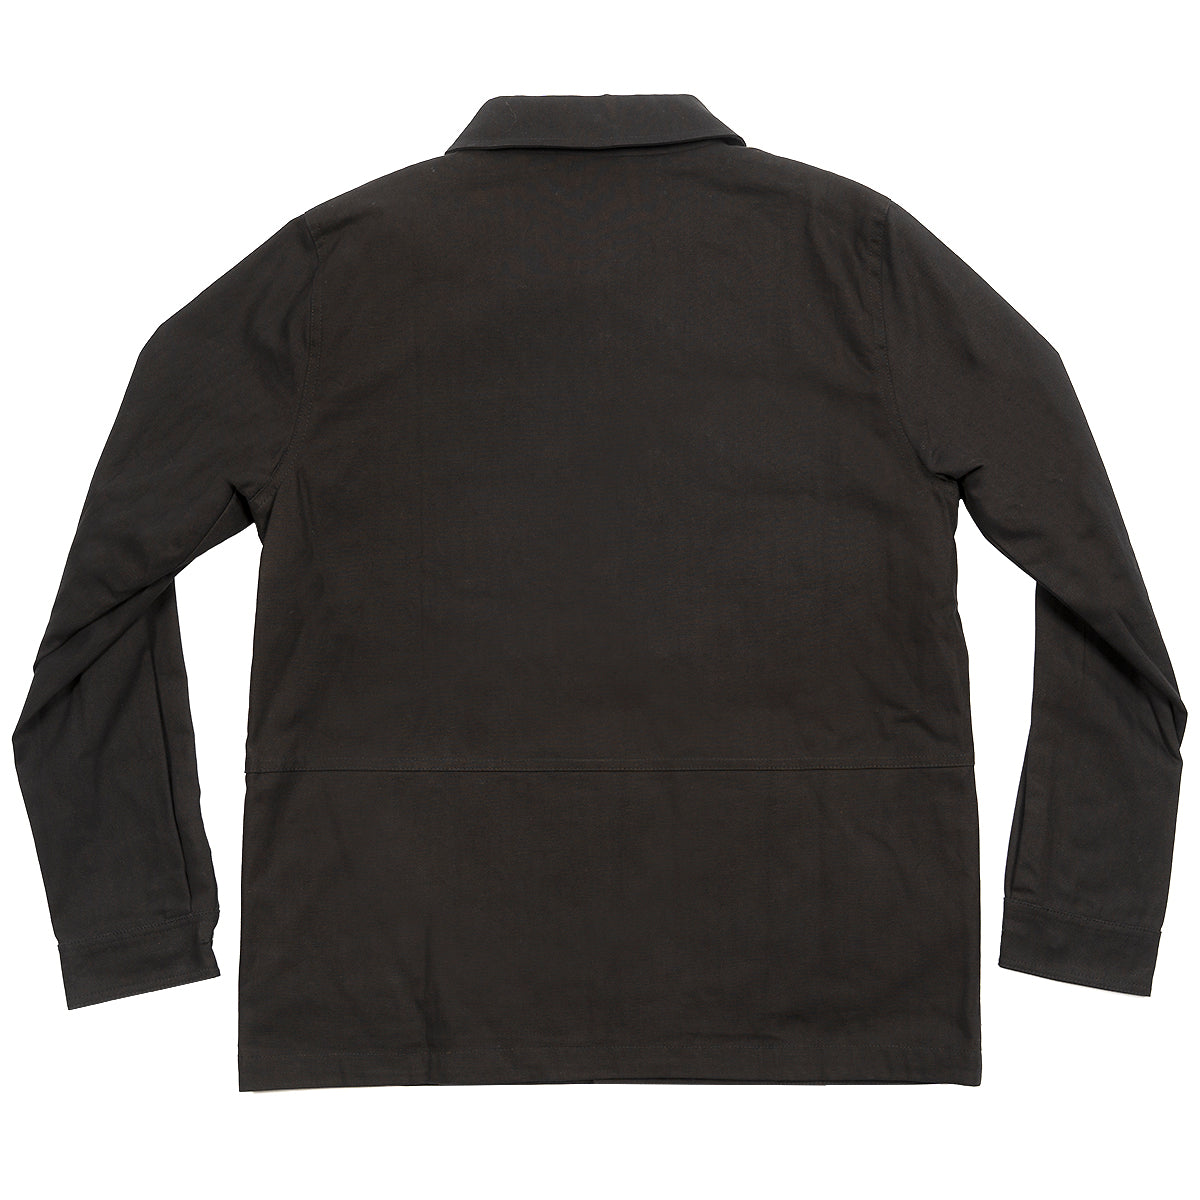 Grafter Chore Coat - Black